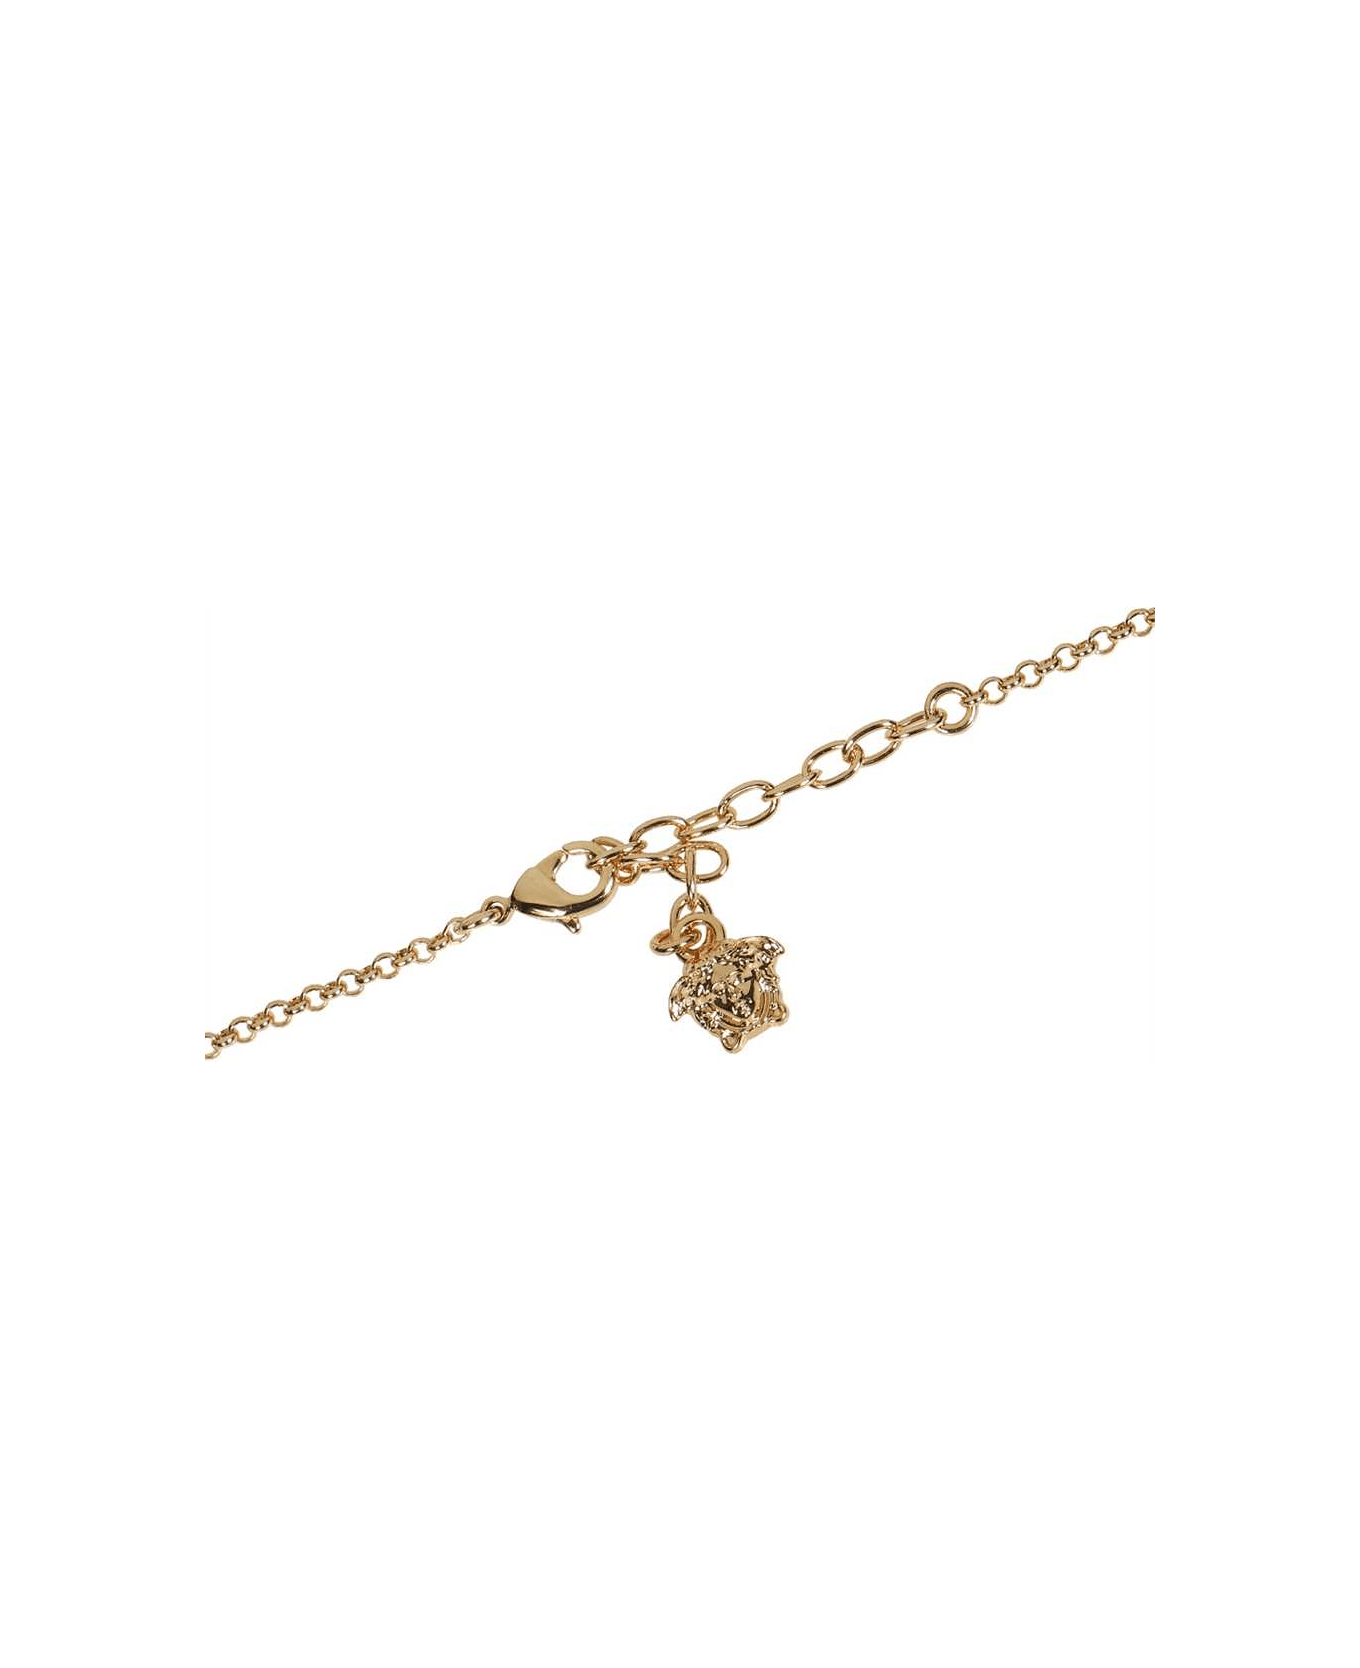 Versace Decorative Pendant Necklace - Gold